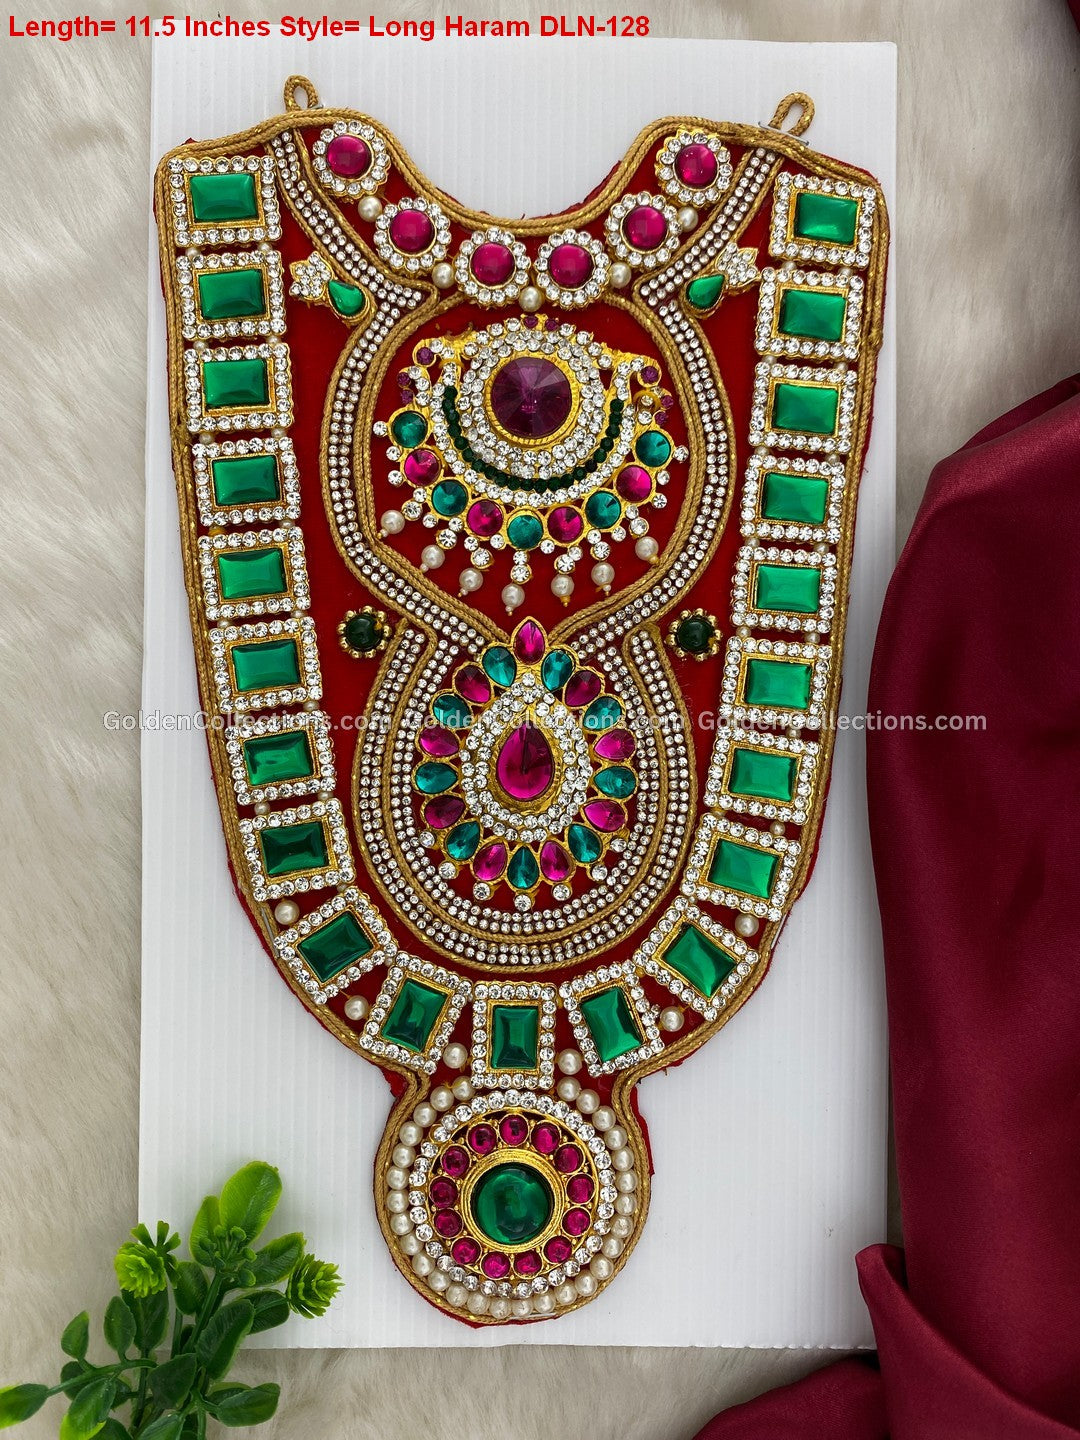 Goddess Lakshmi Ornate Long Necklace - DLN-128